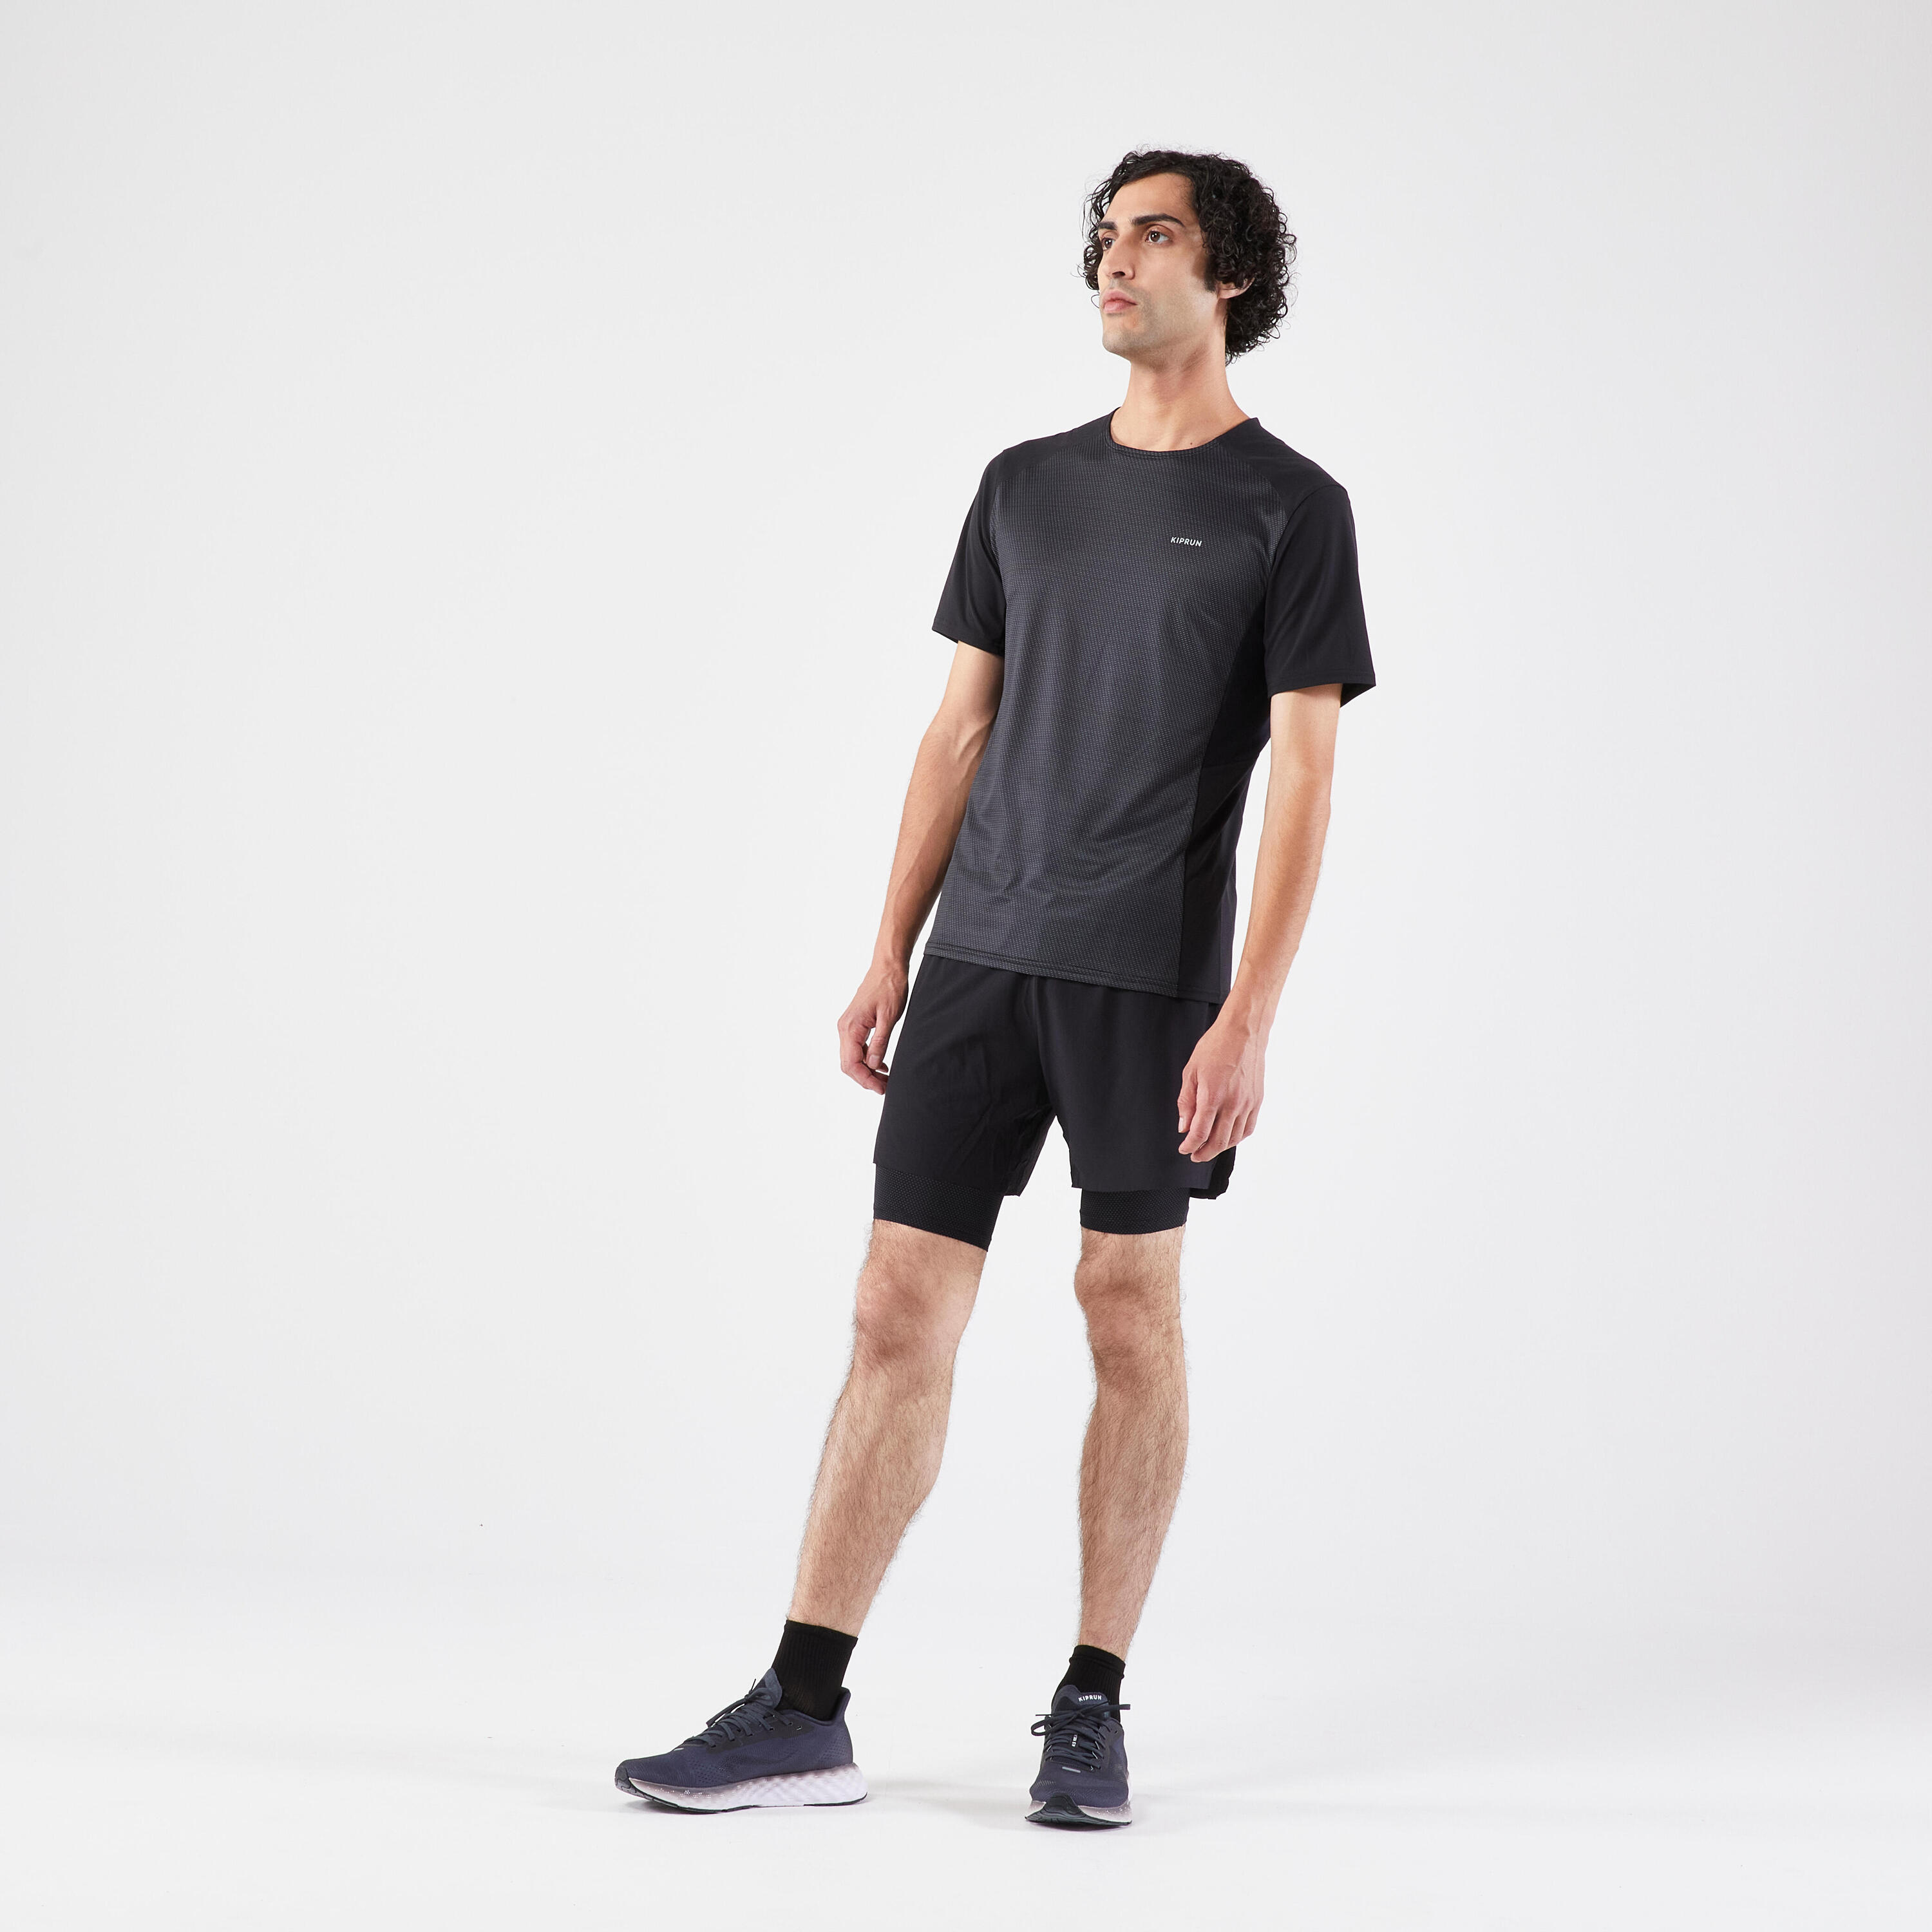 KIPRUN Run 900 Light Men's Breathable Running T-shirt - Black 5/6